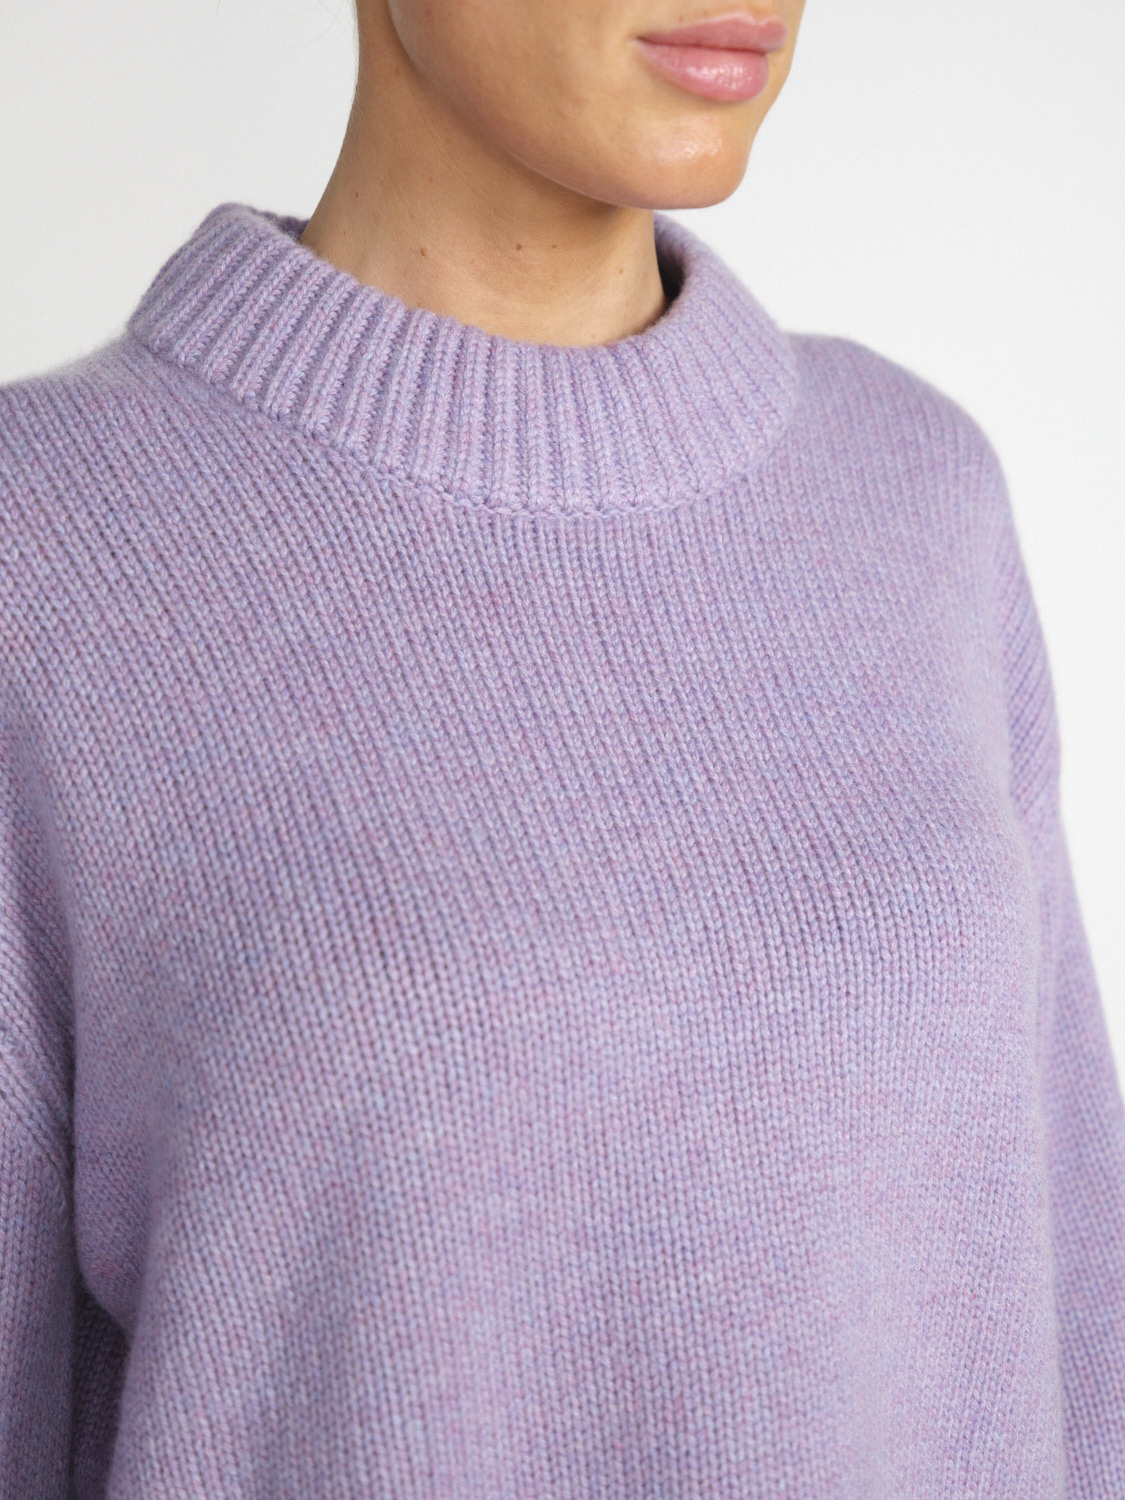 Lisa Yang Sony - Short cashmere sweater  lila One Size